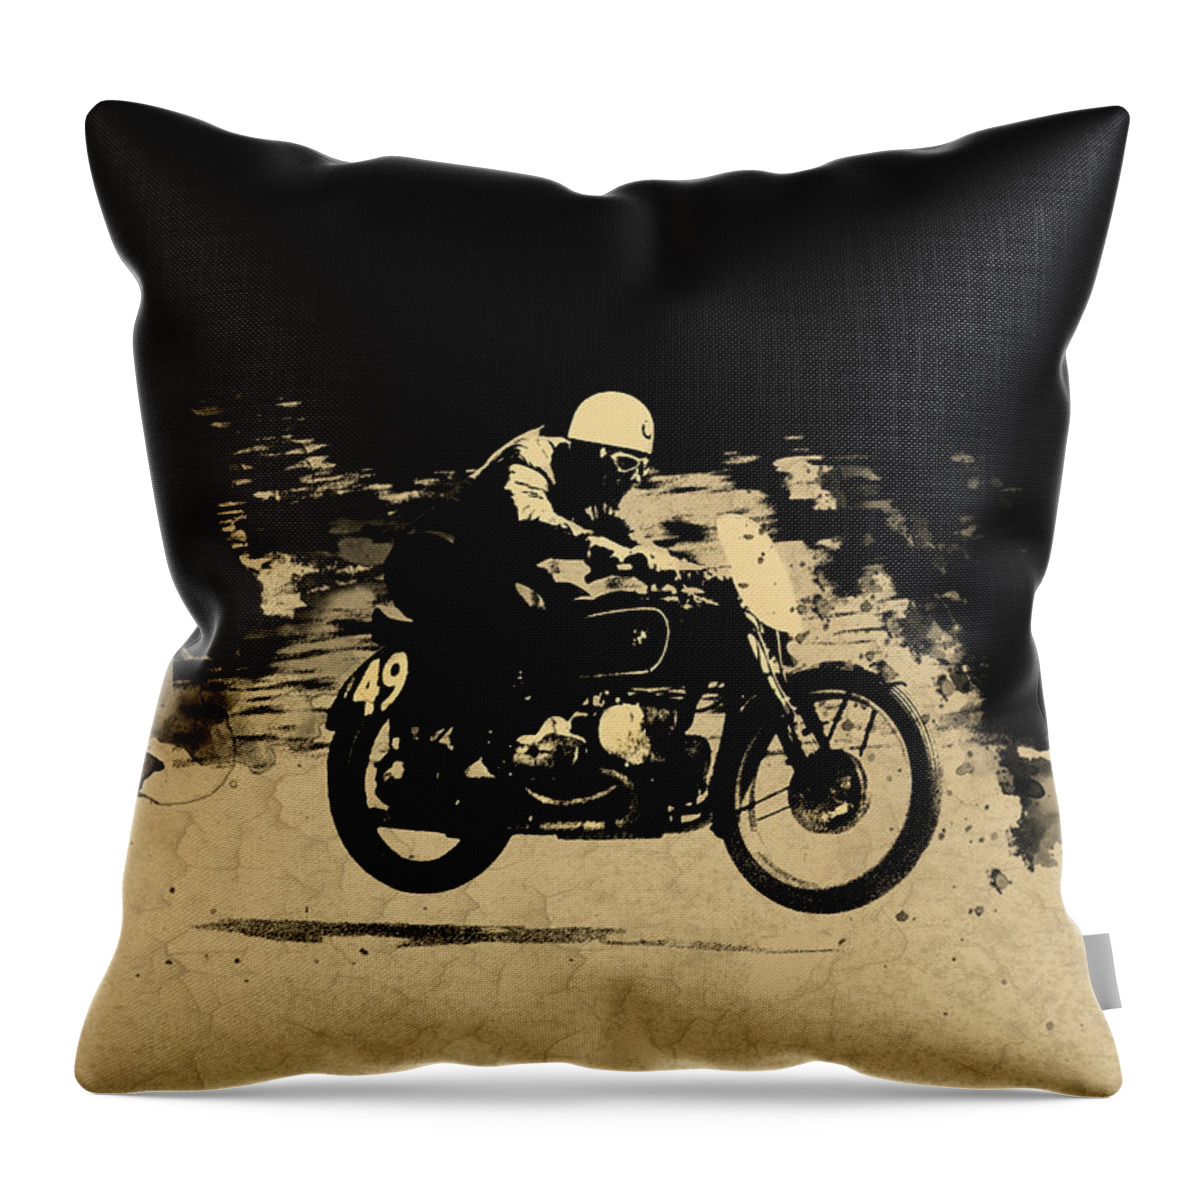 Vintage Motorcycle Racer Throw Pillow featuring the photograph The Vintage Motorcycle Racer by Mark Rogan